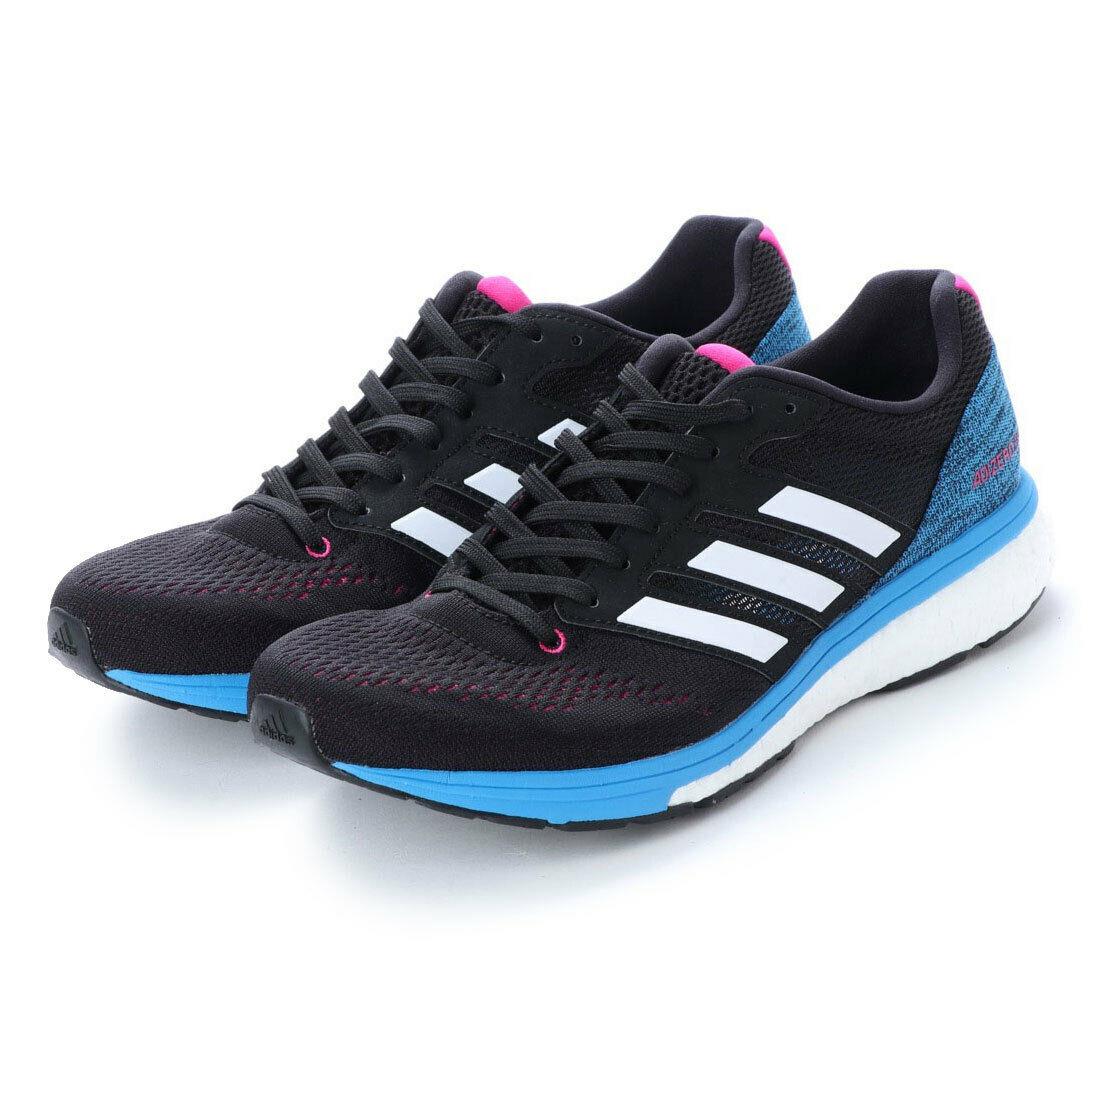 Women Adidas Adizero Boston 7 Running Shoes Black Sneakers Size 5 5.5